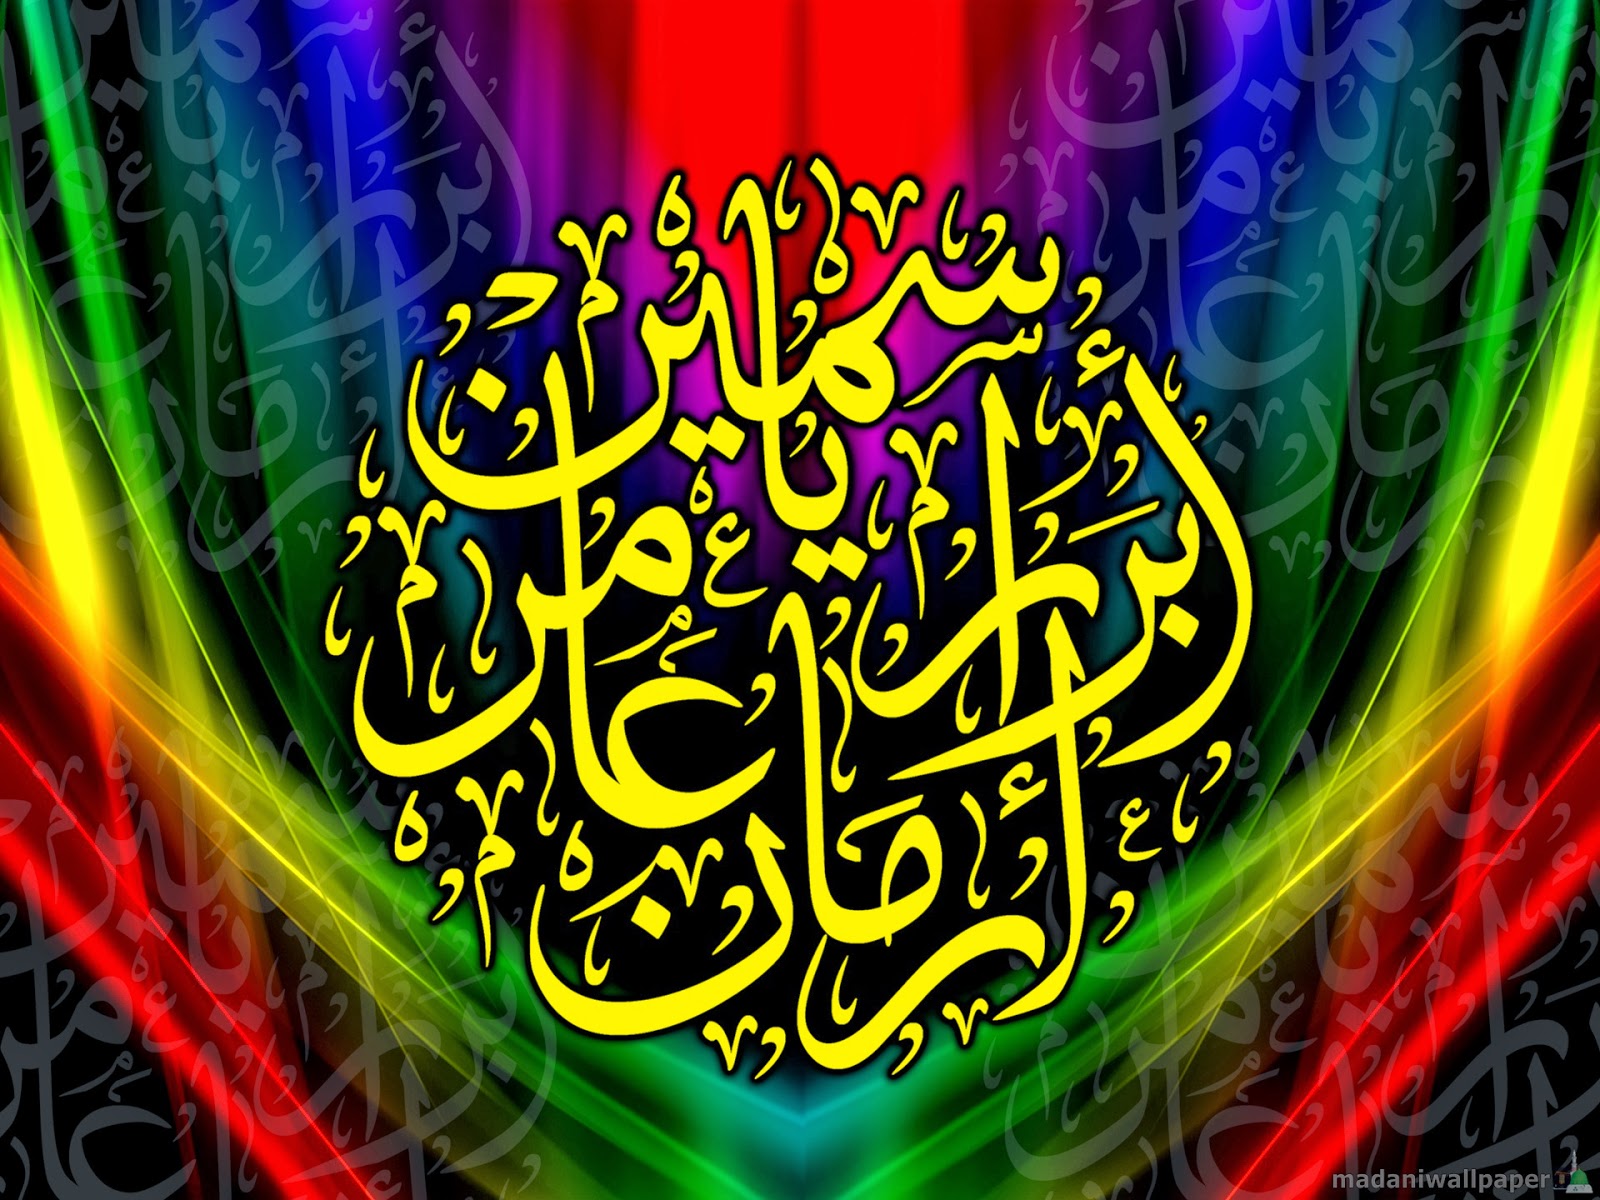  Islamic  Wallpapers  Latest Islamic  Desktop  Wallpapers  